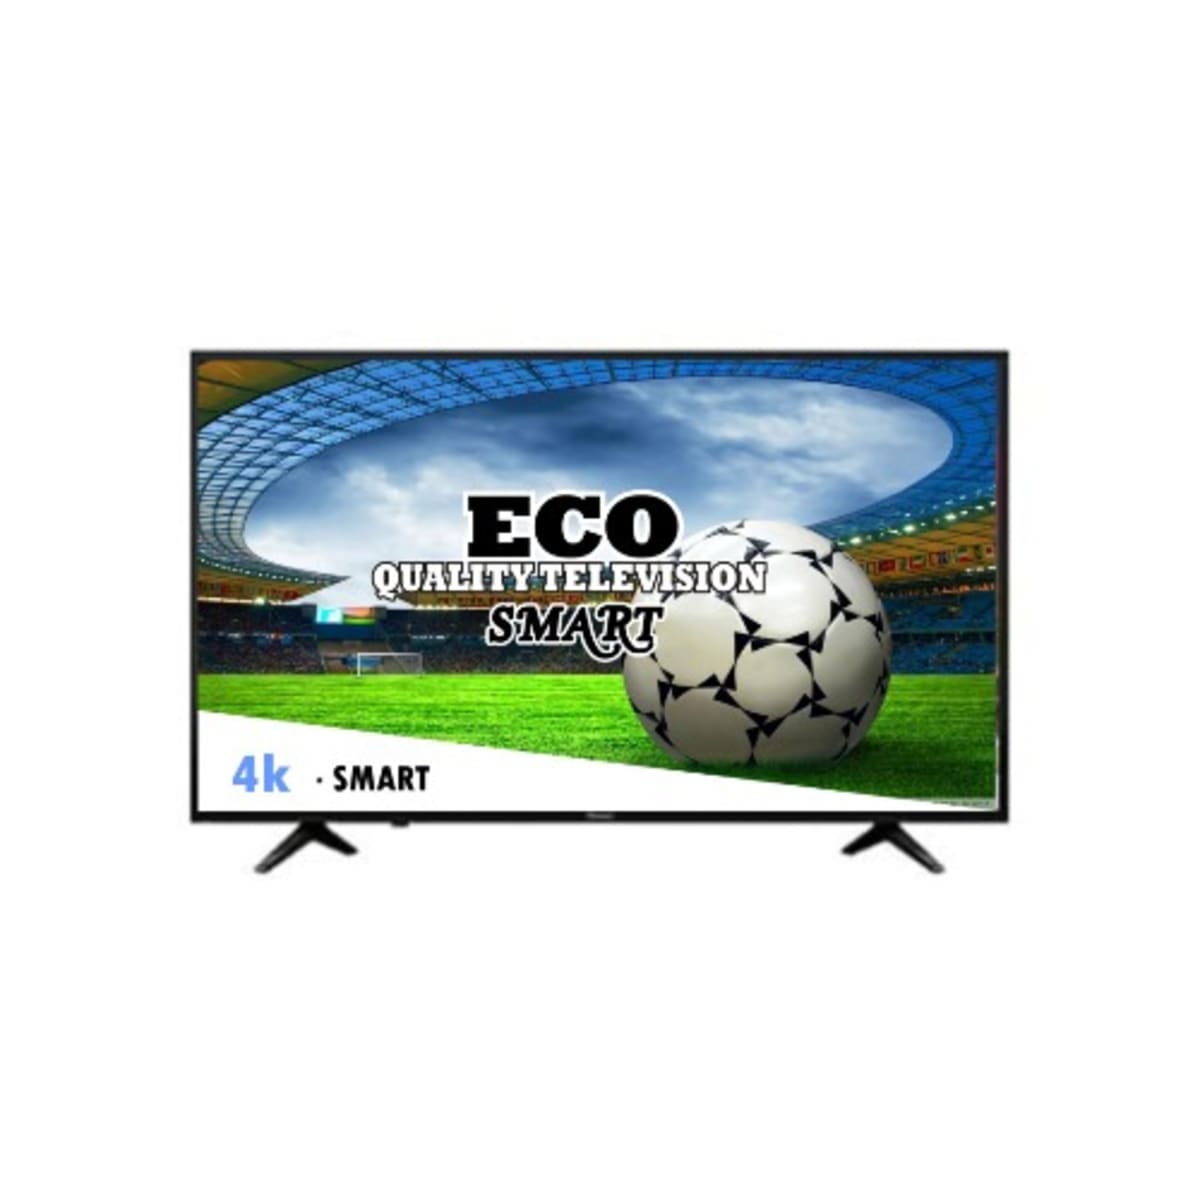 Eco 32 LED Television